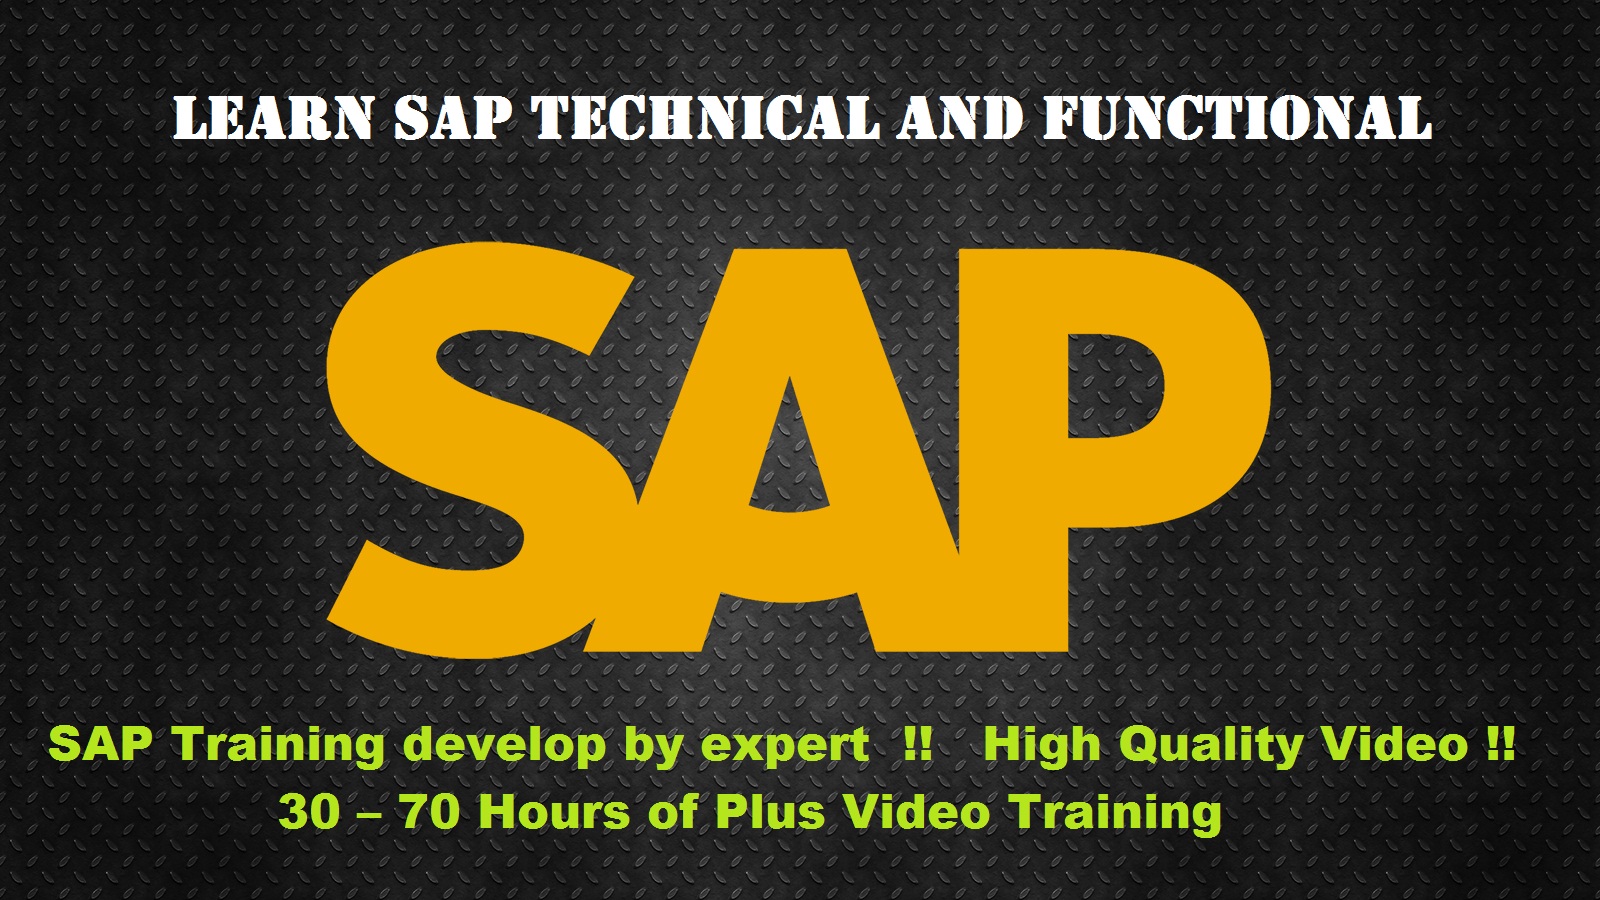 Sap video tutorialEducation and LearningText books & Study MaterialEast DelhiMayur Vihar